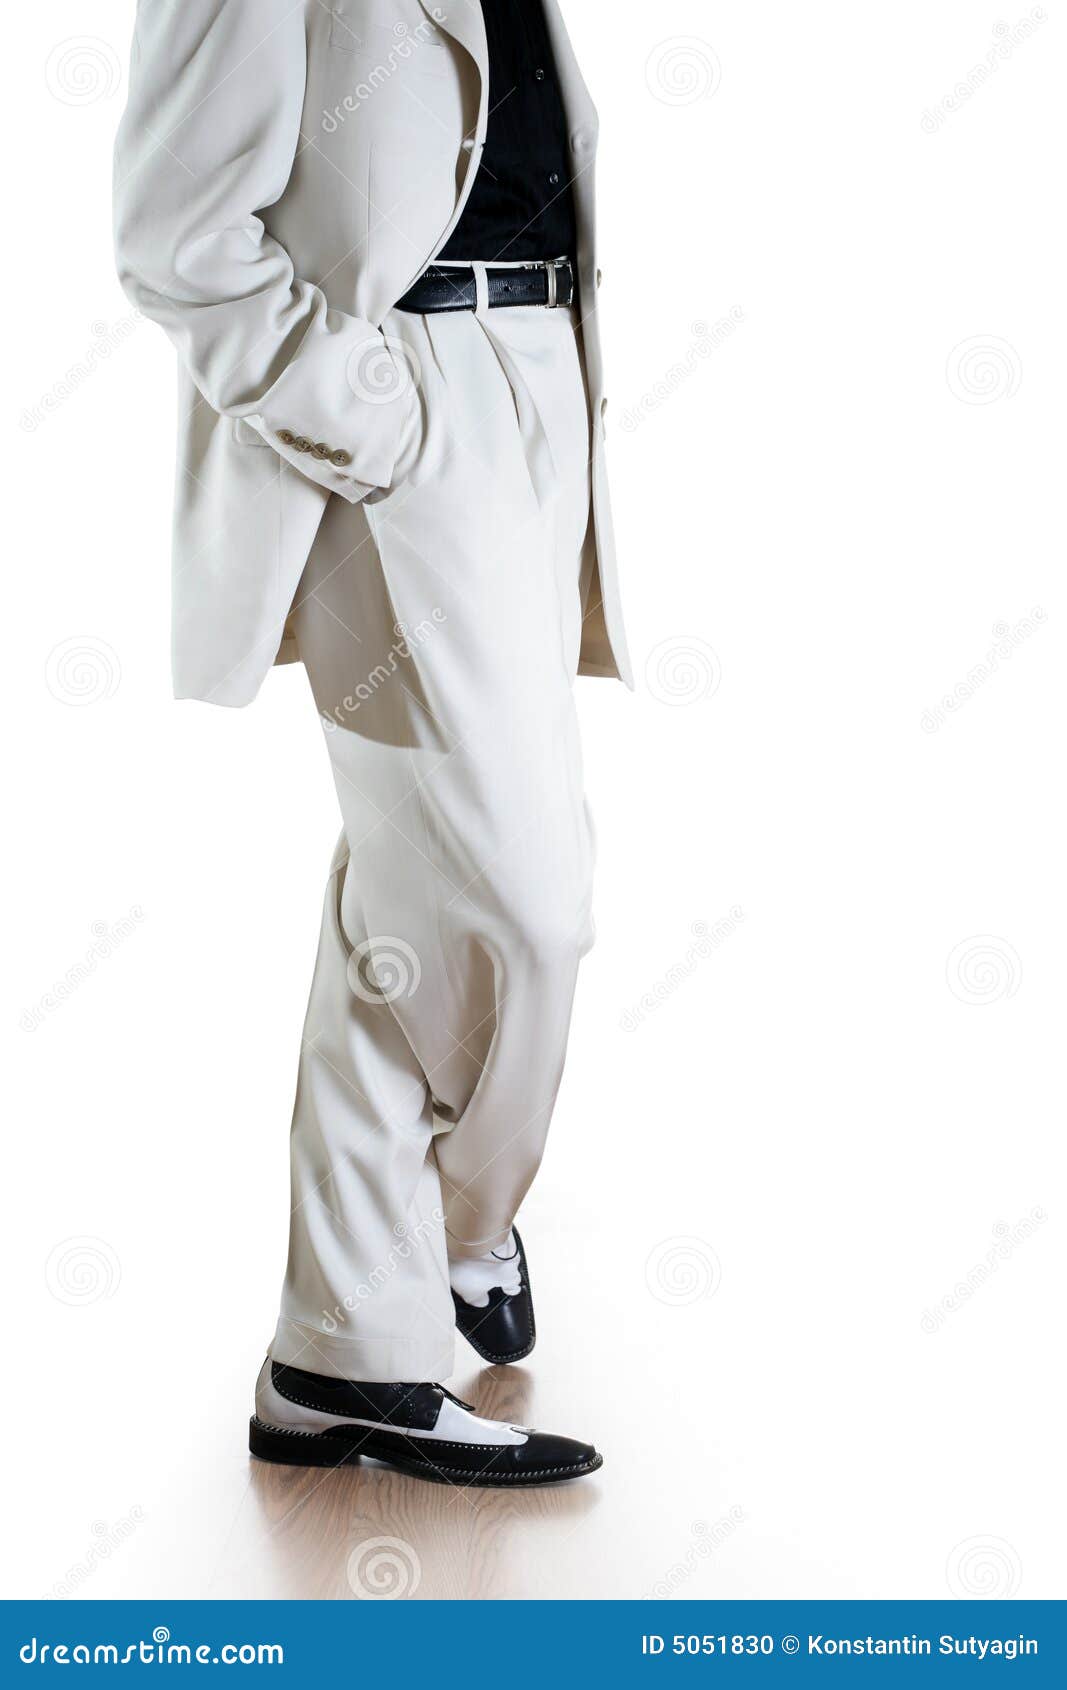 man white suit 5051830